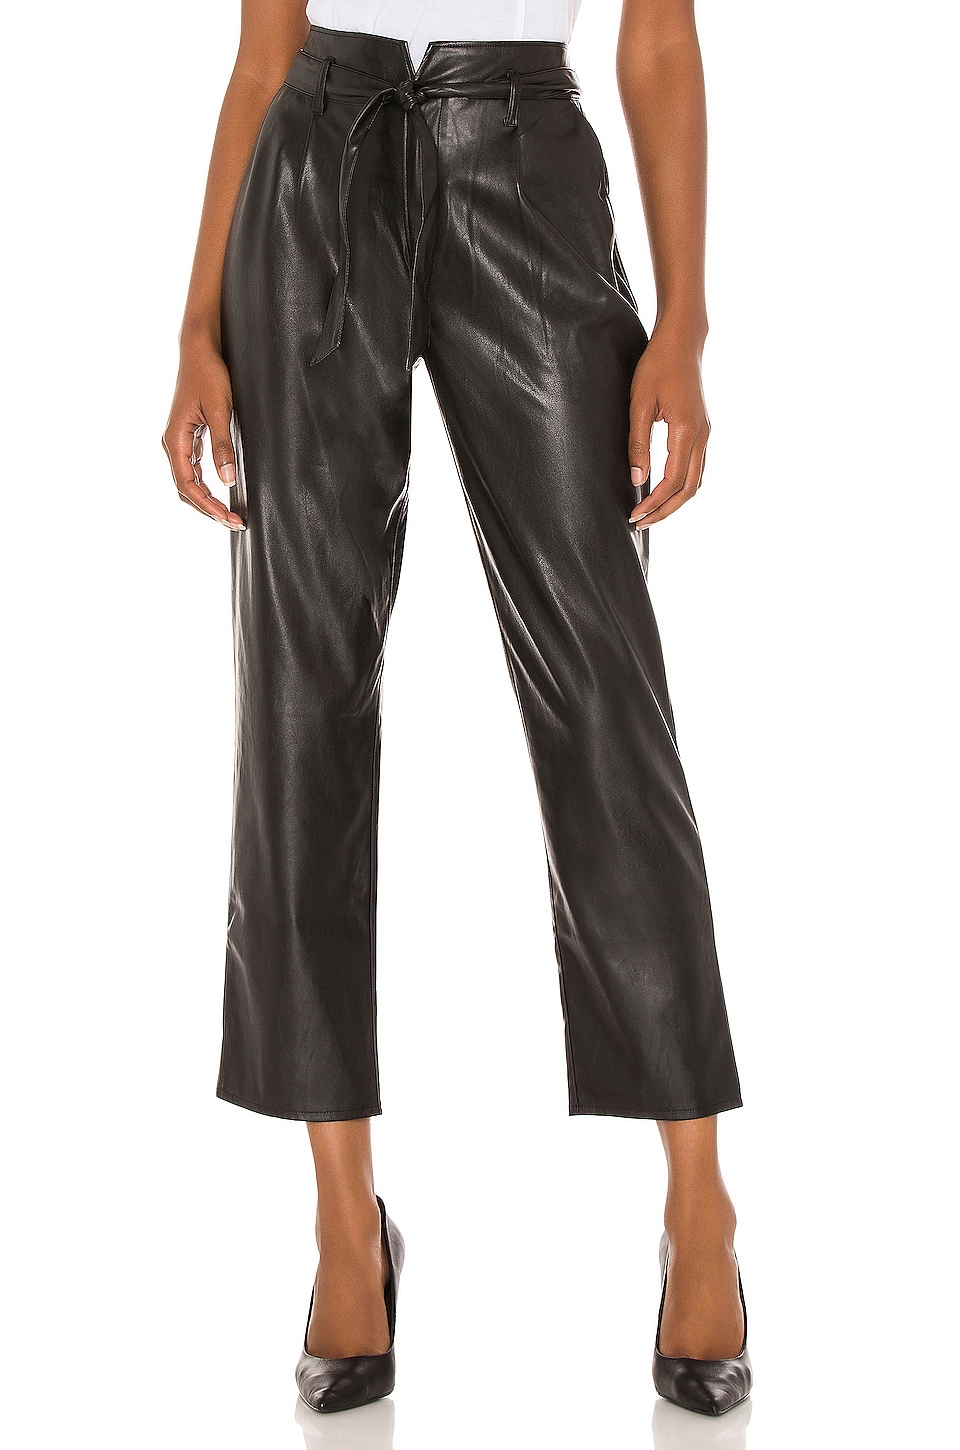 paige leather pants